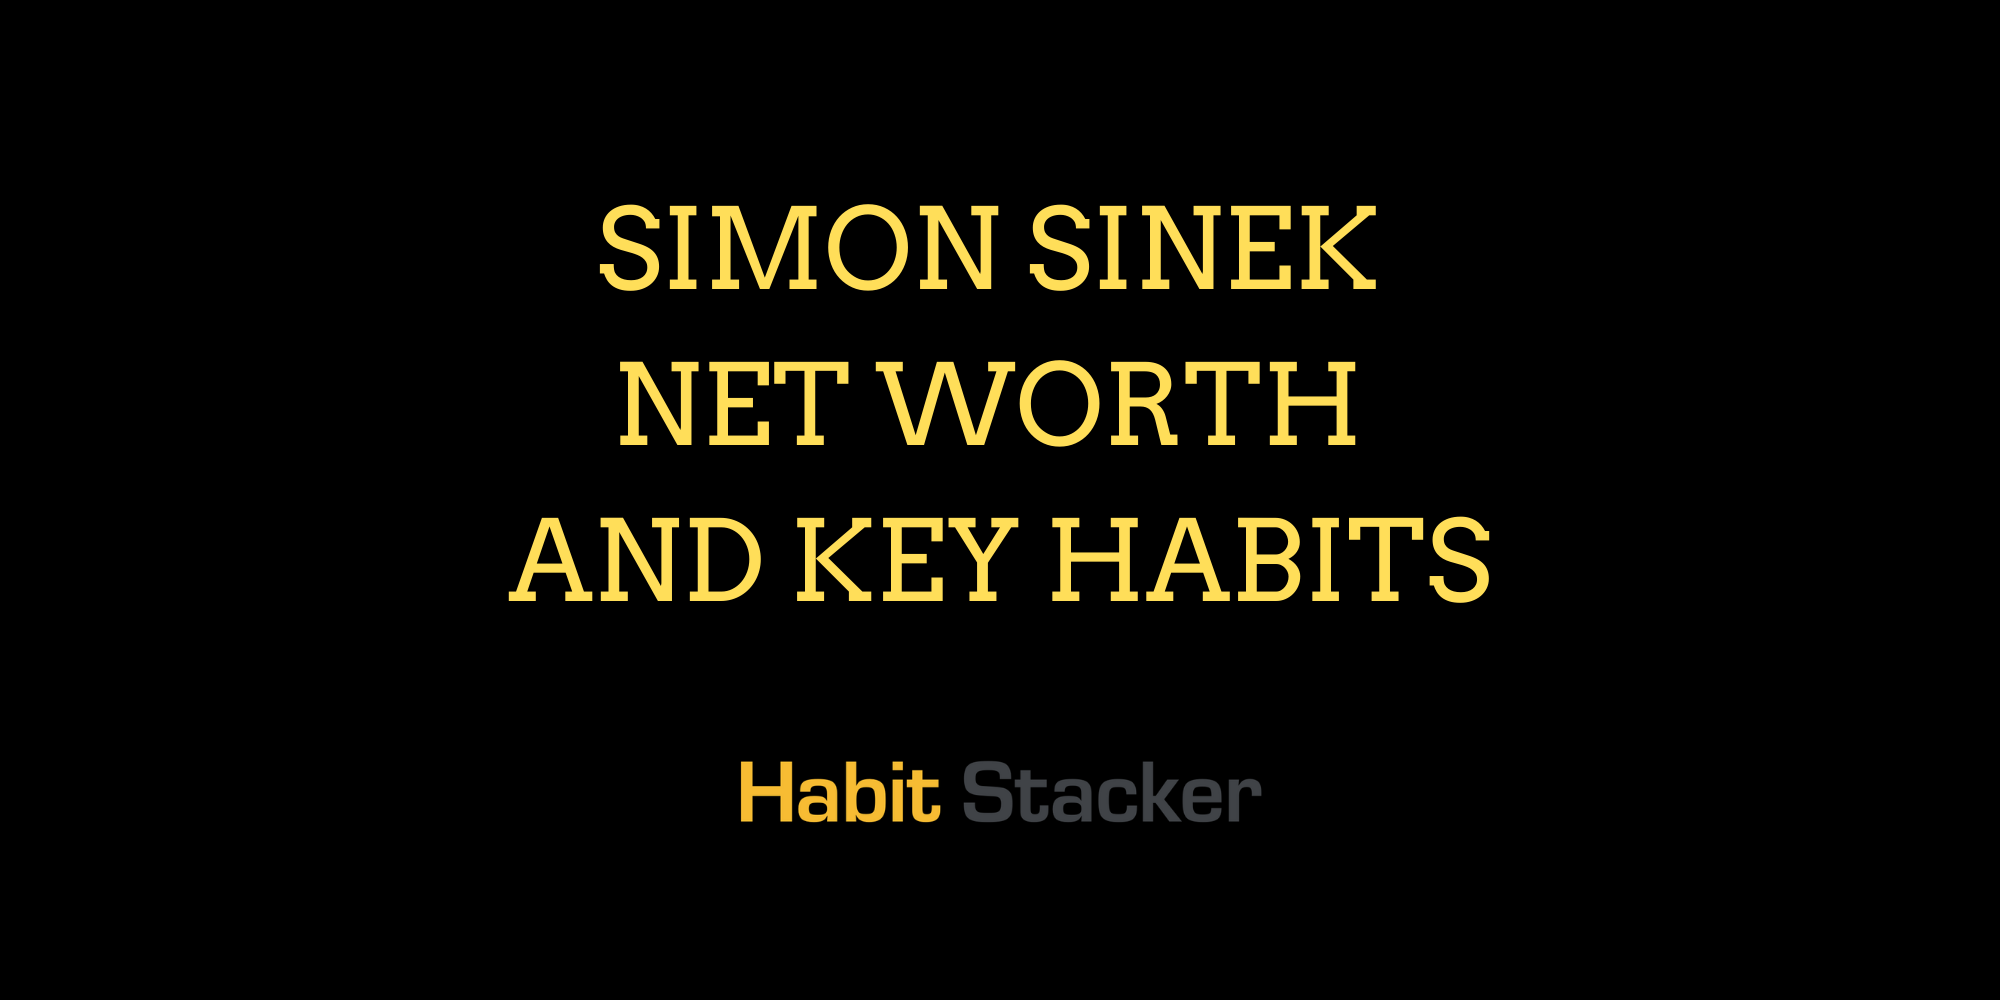 Simon Sinek Net Worth and Key Habits